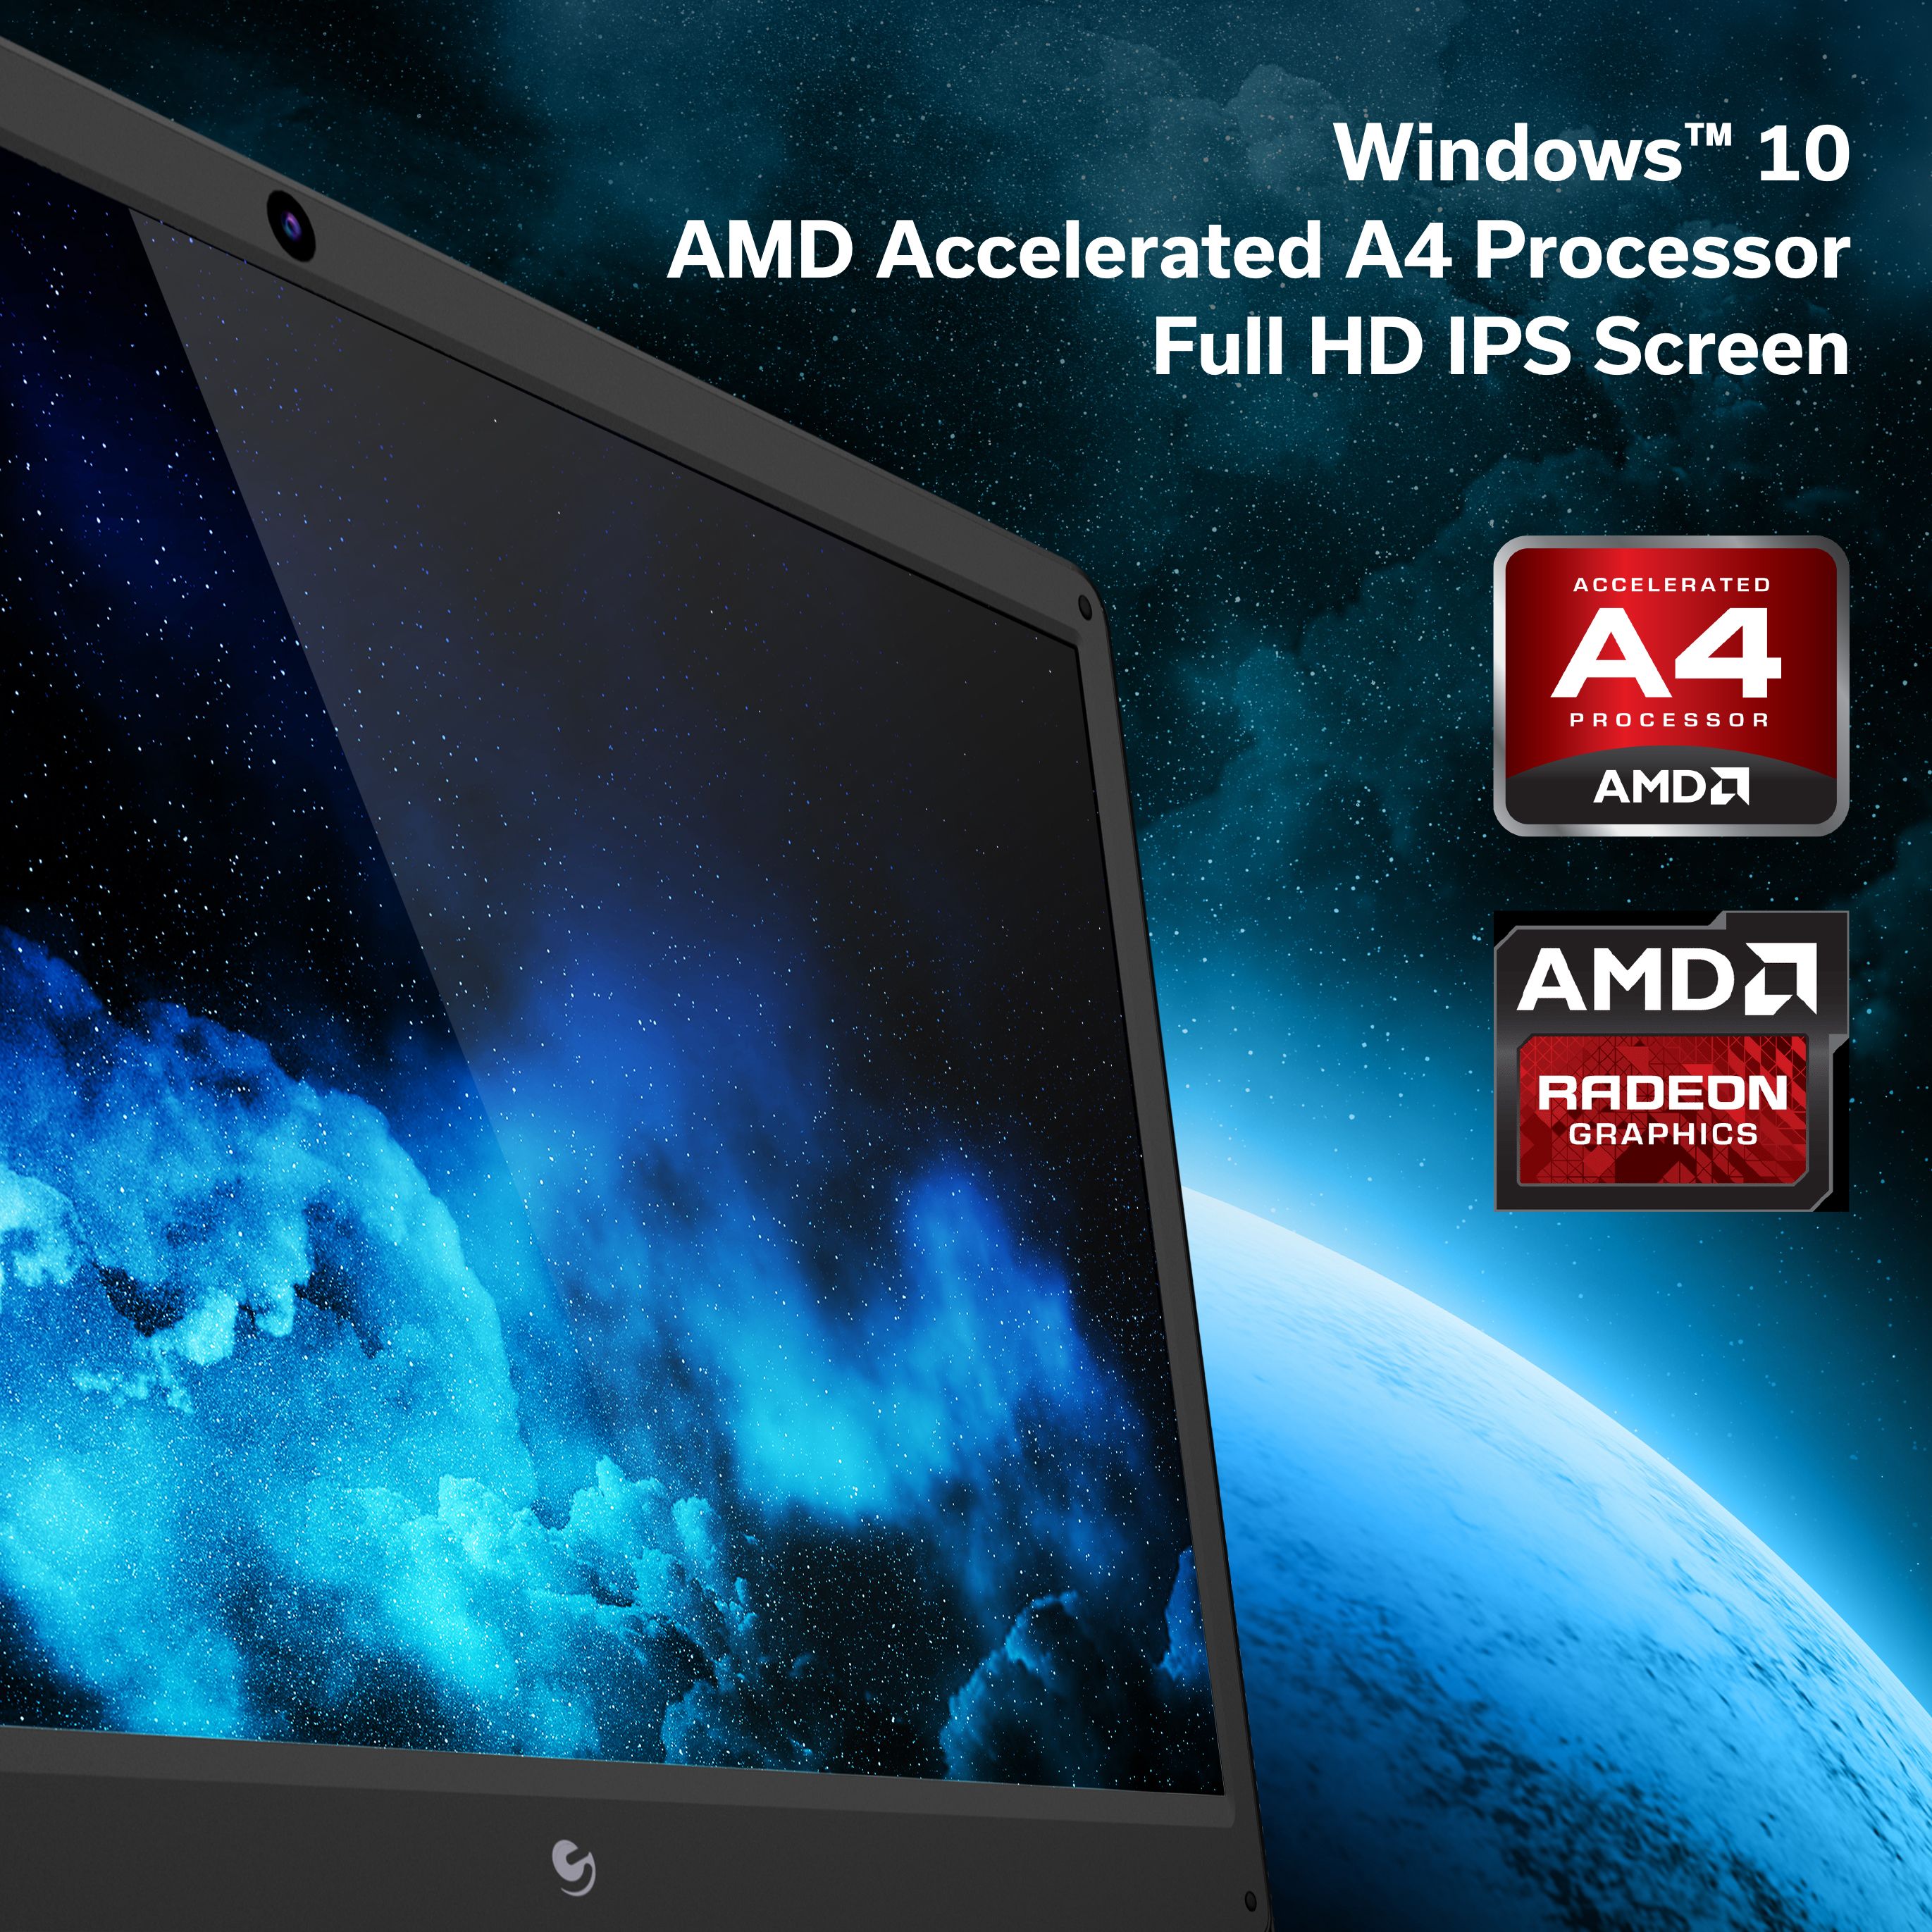 Ematic 13.3" Laptop with Full IPS HD Display, 4GB RAM, 64 GB Storage, AMD & Windows 10, Black (EWT148AB) - image 4 of 8